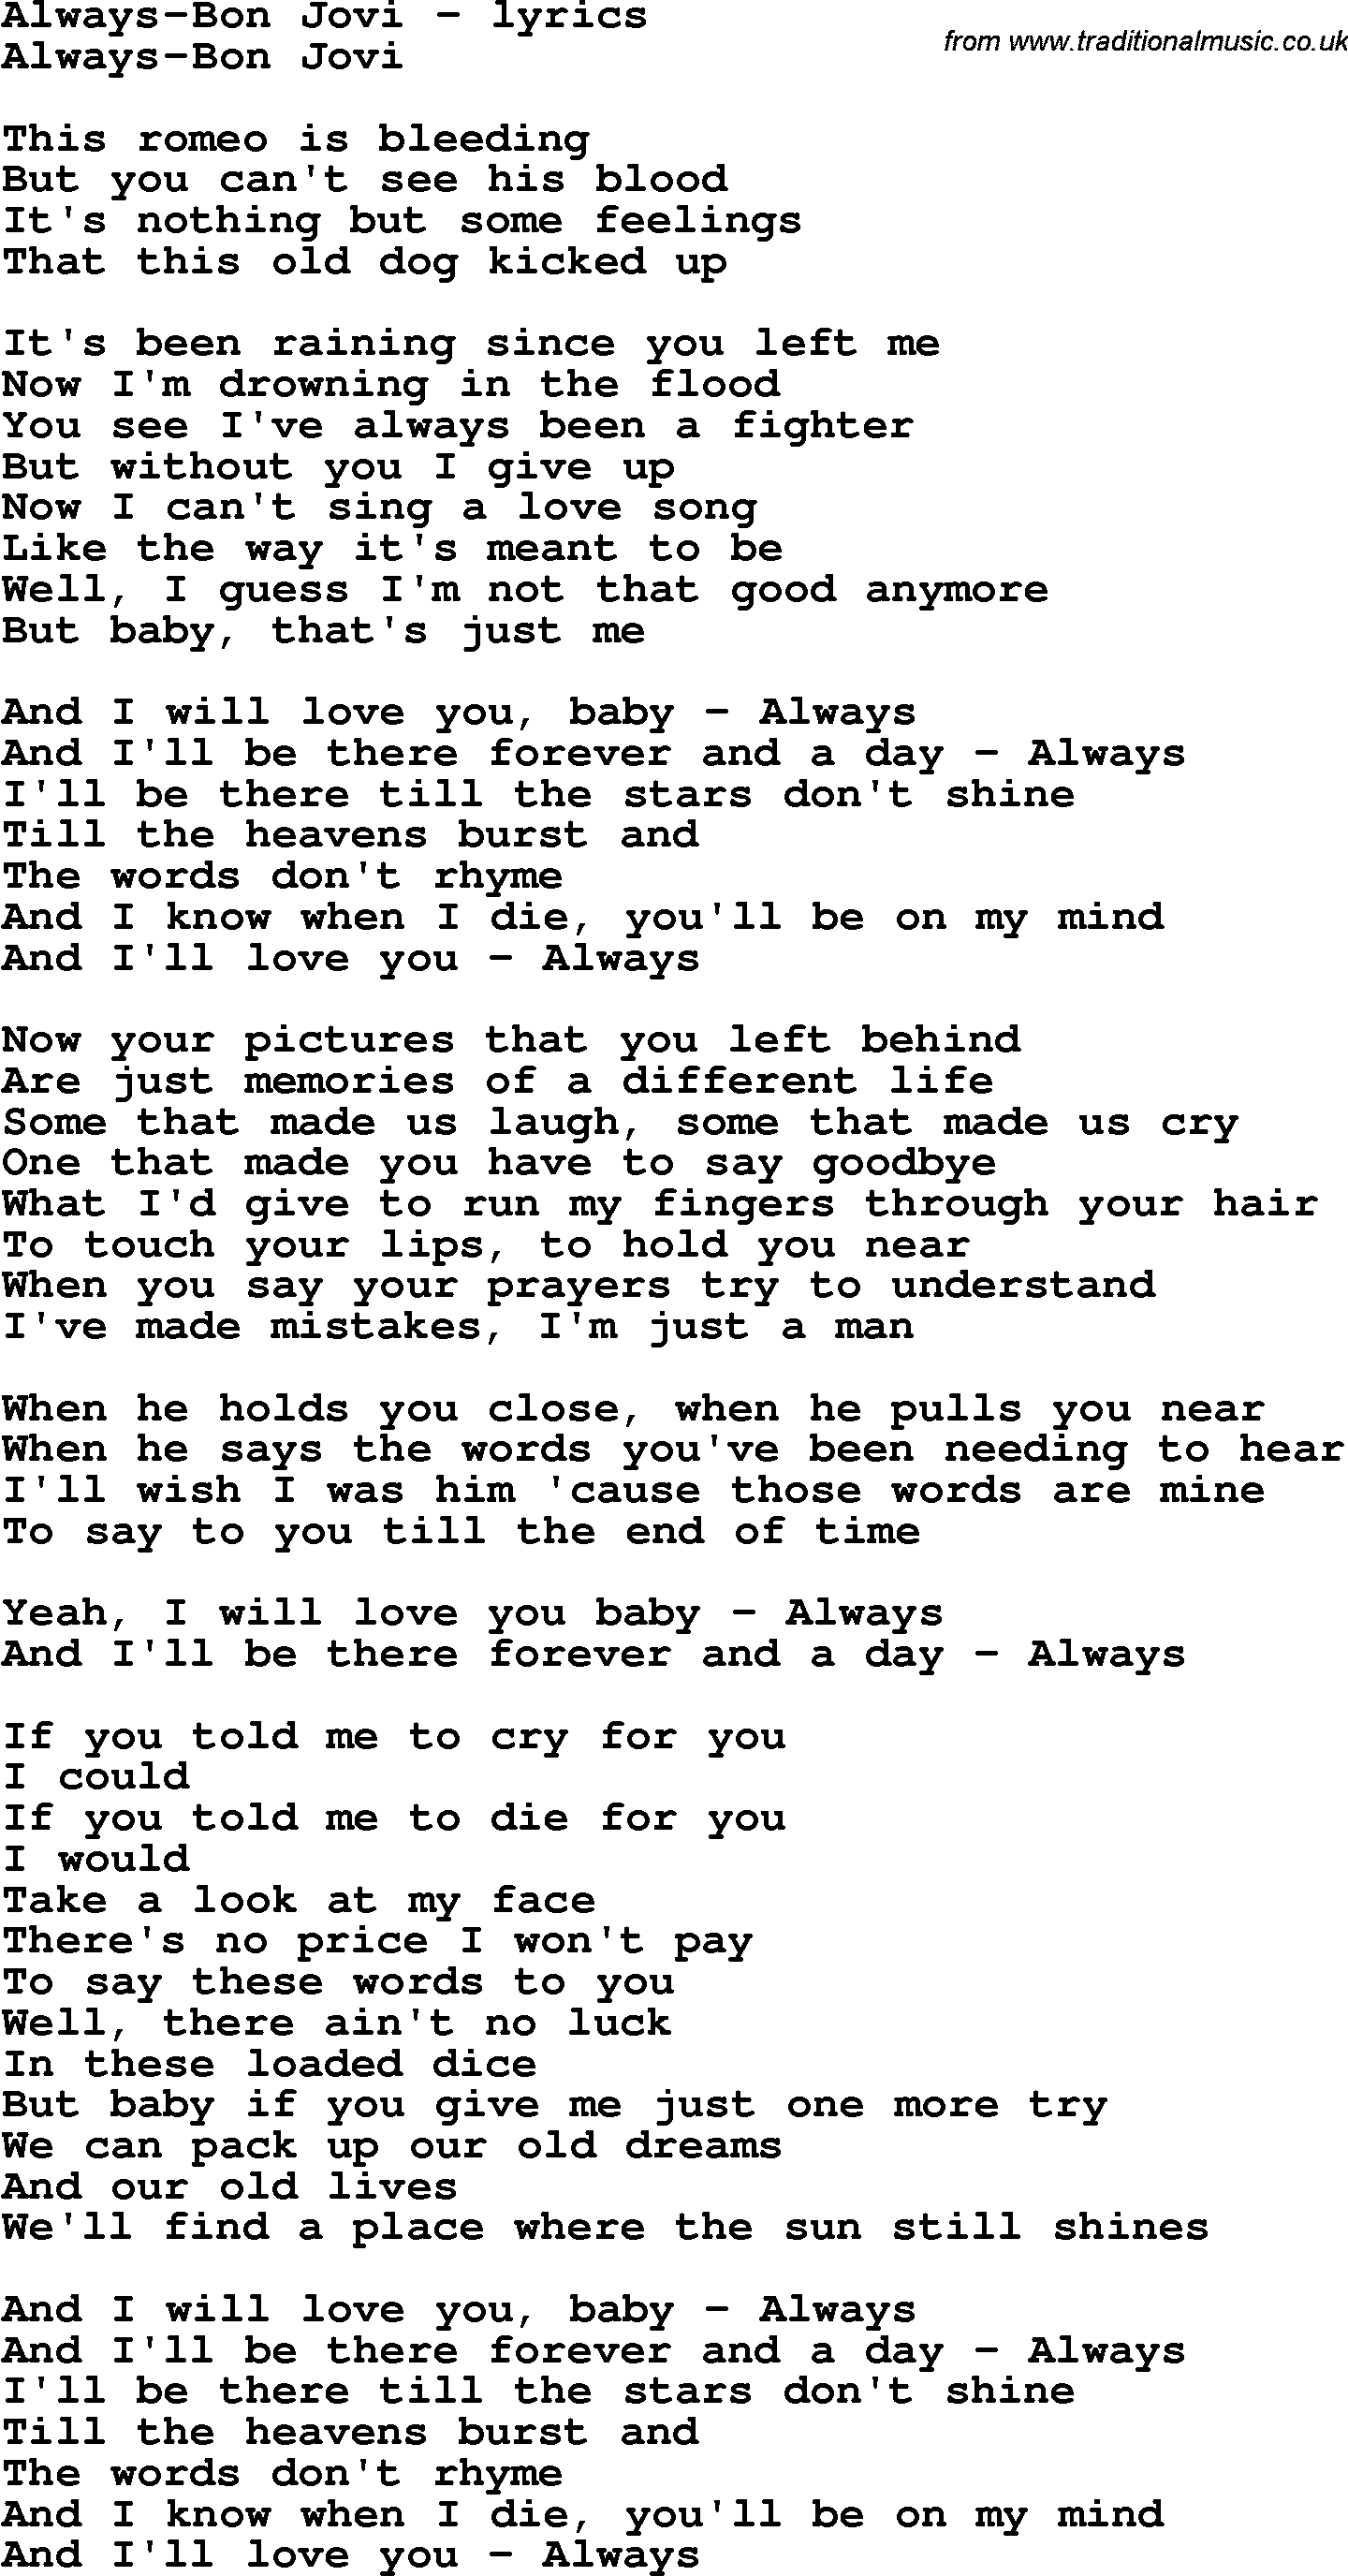 Love Song Lyrics for: Always-Bon Jovi